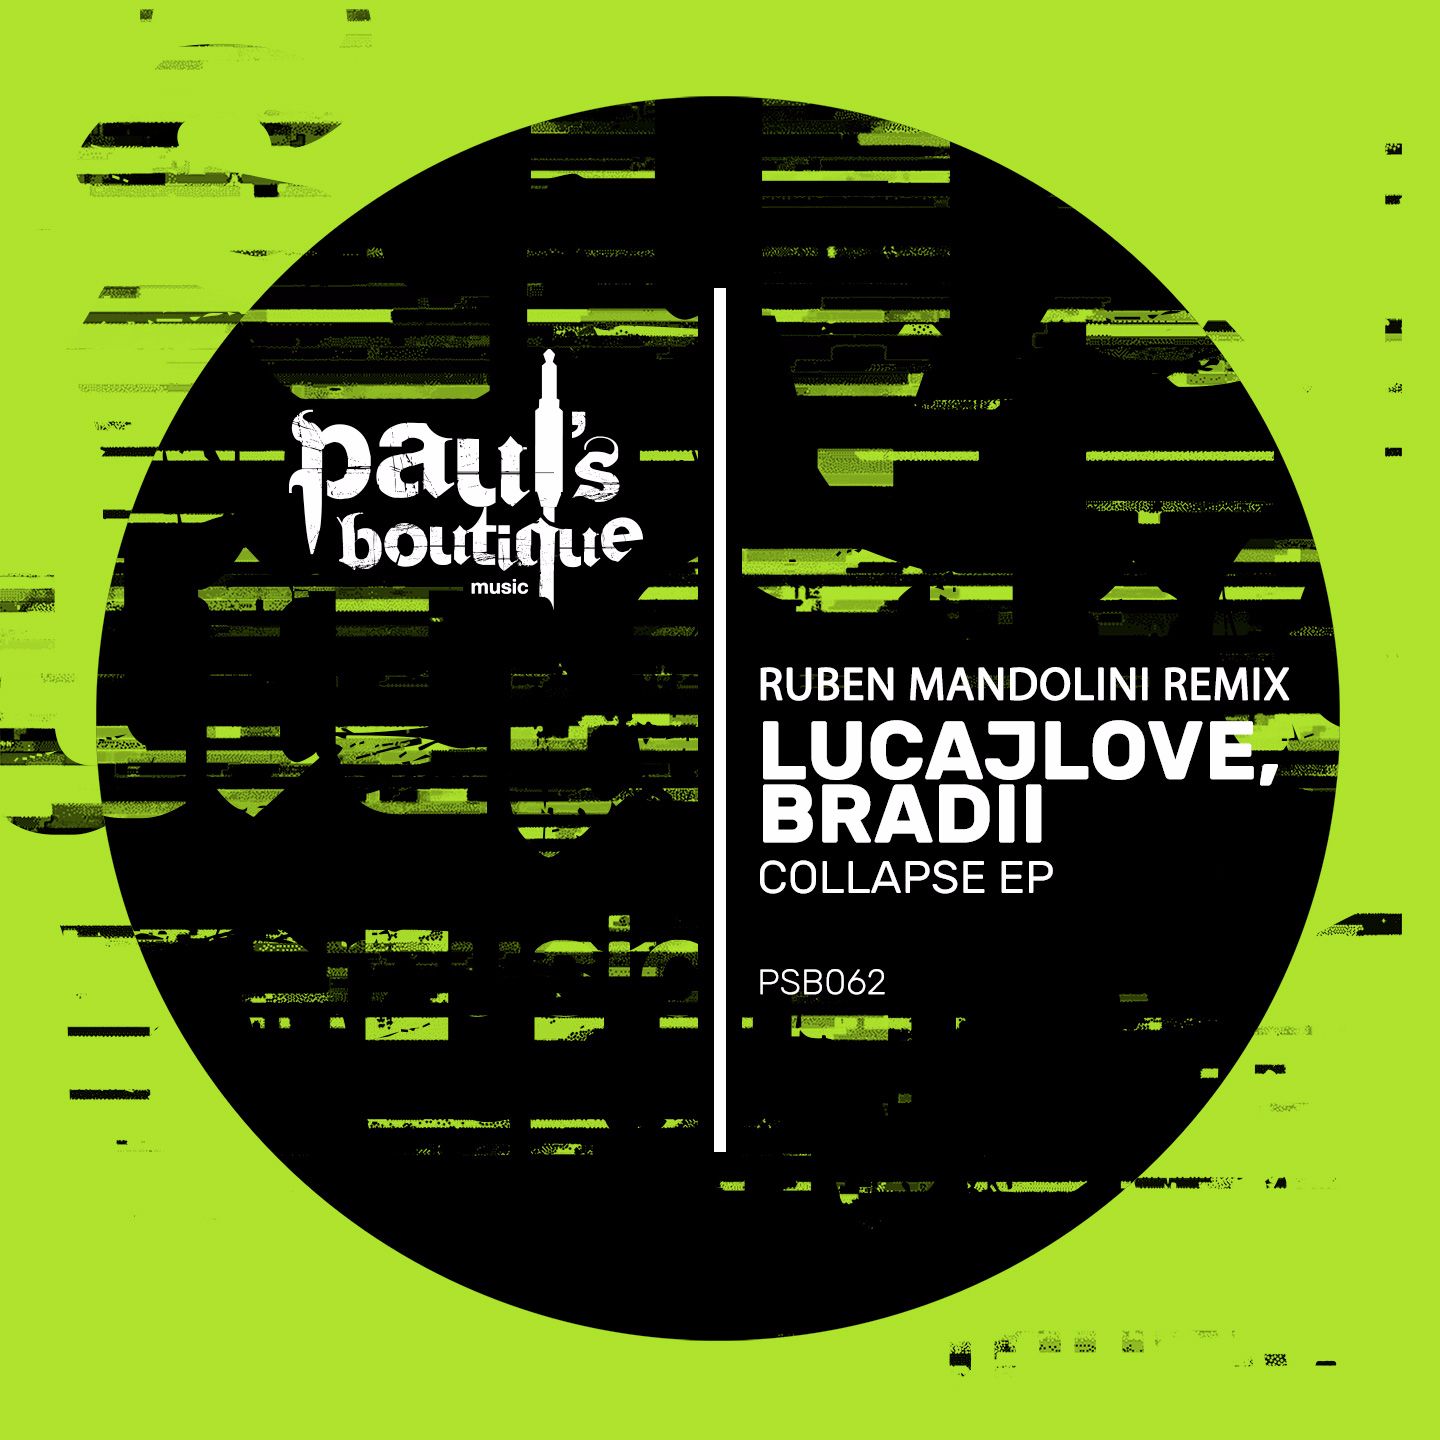 Ladda ner LucaJLove, Bradii - Who Really Knows (Ruben Mandolini Remix)  [Paul's Boutique]